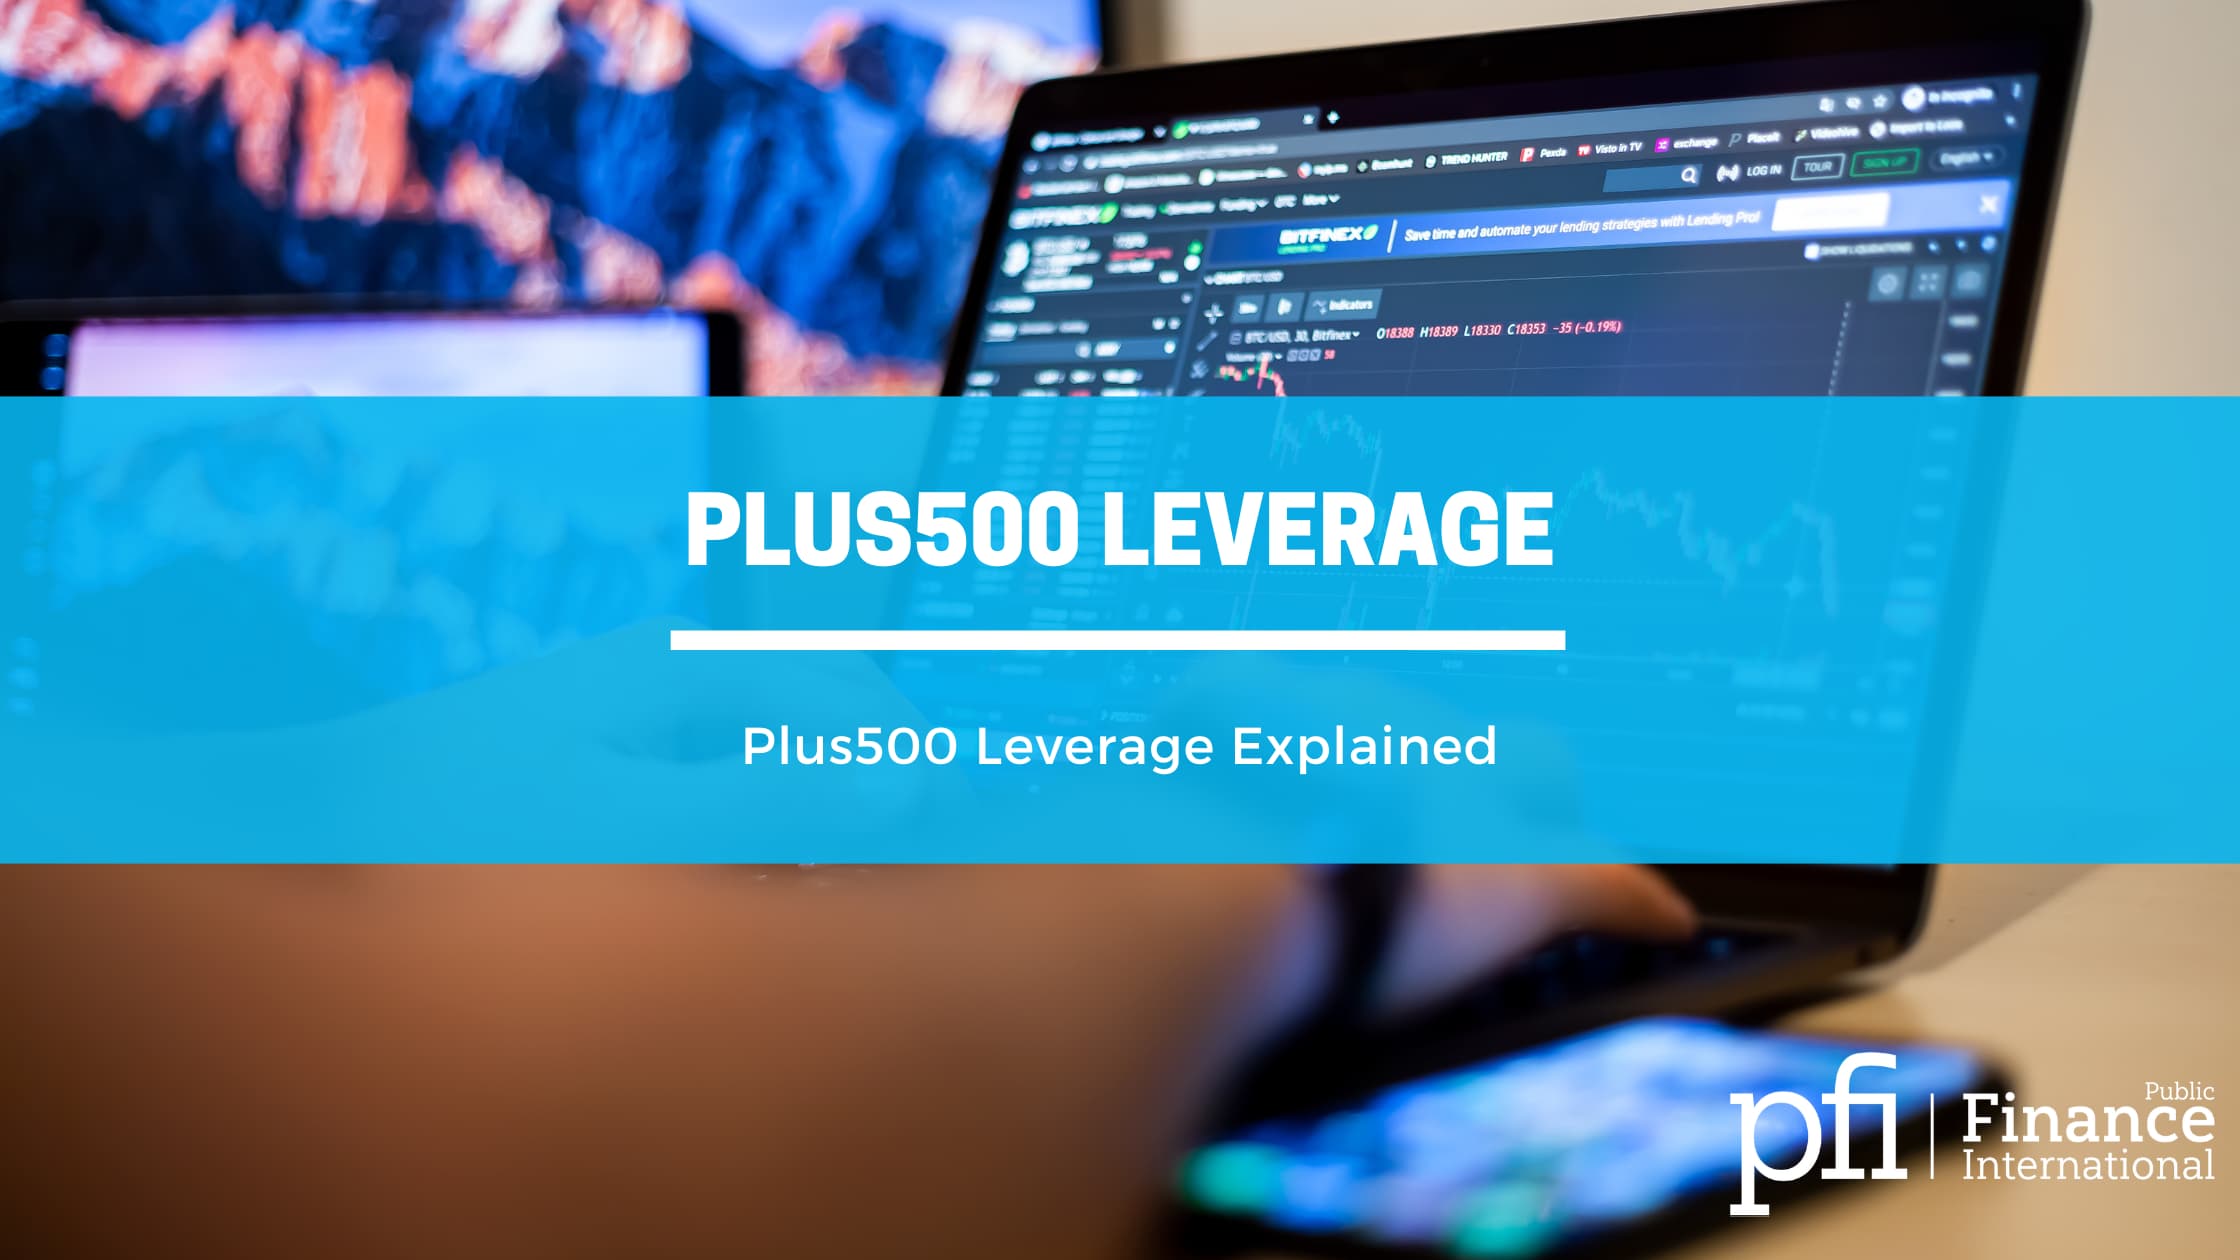 Leverage at Plus500 explained